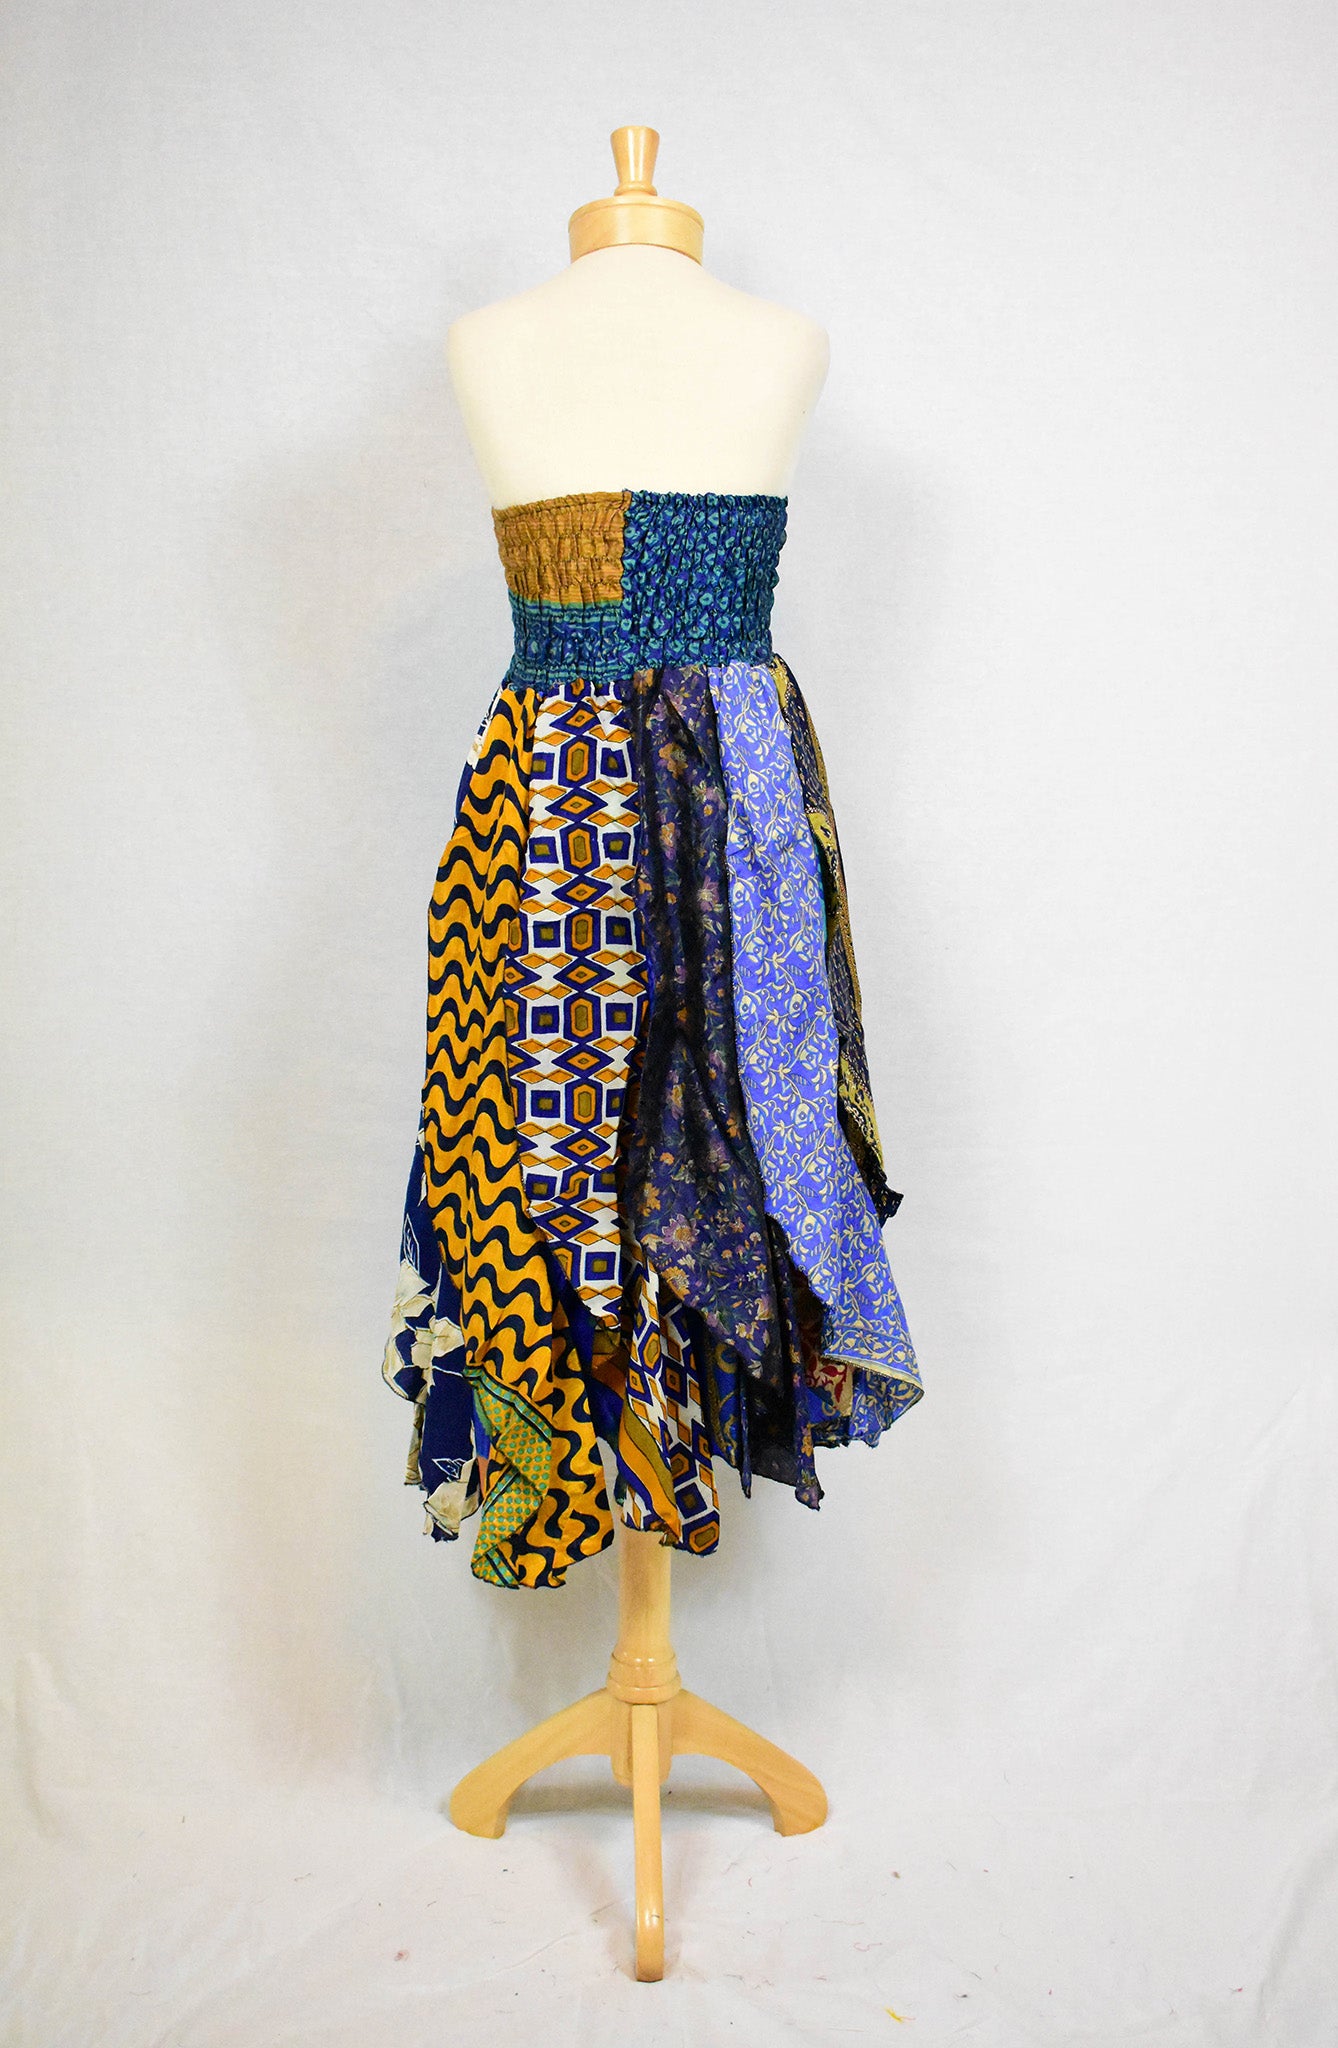 Fairy Dress Ruffle Skirt 10 Back View